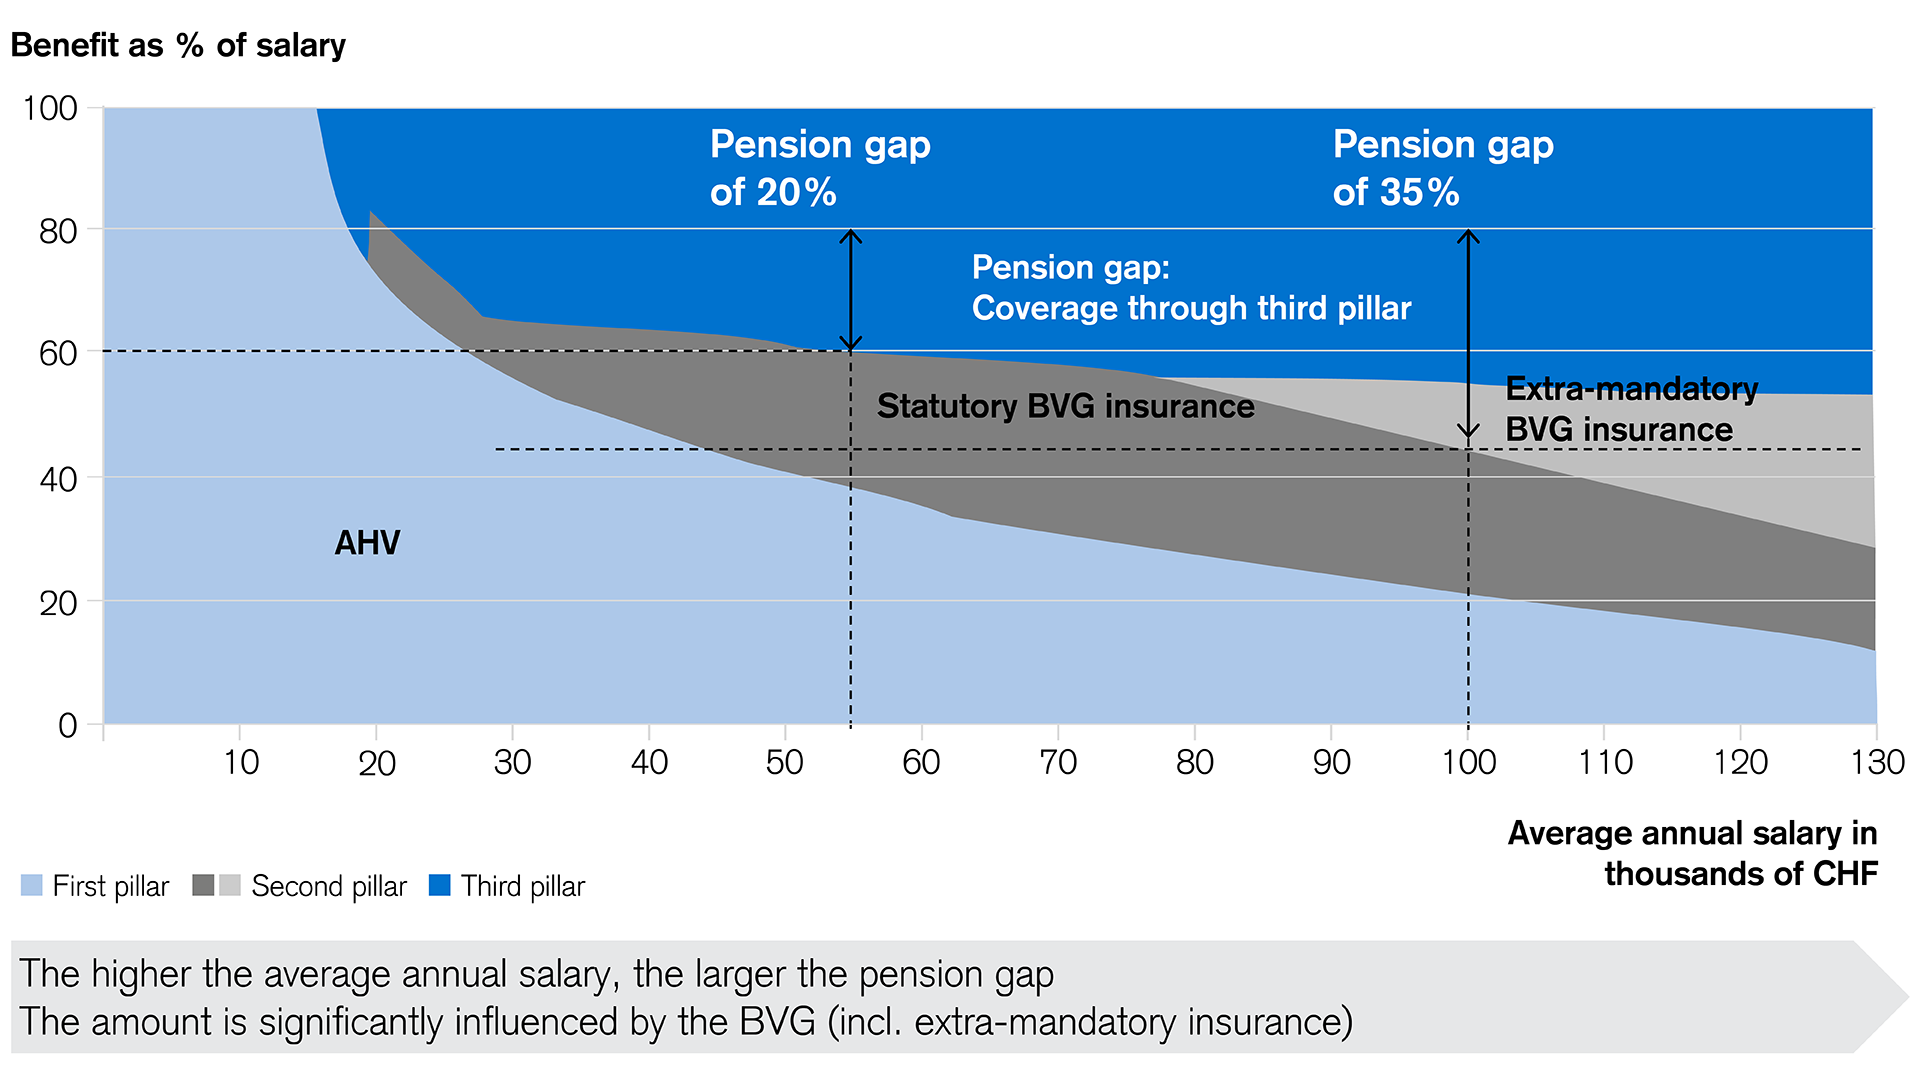 Pension gaps in the three-pillar system